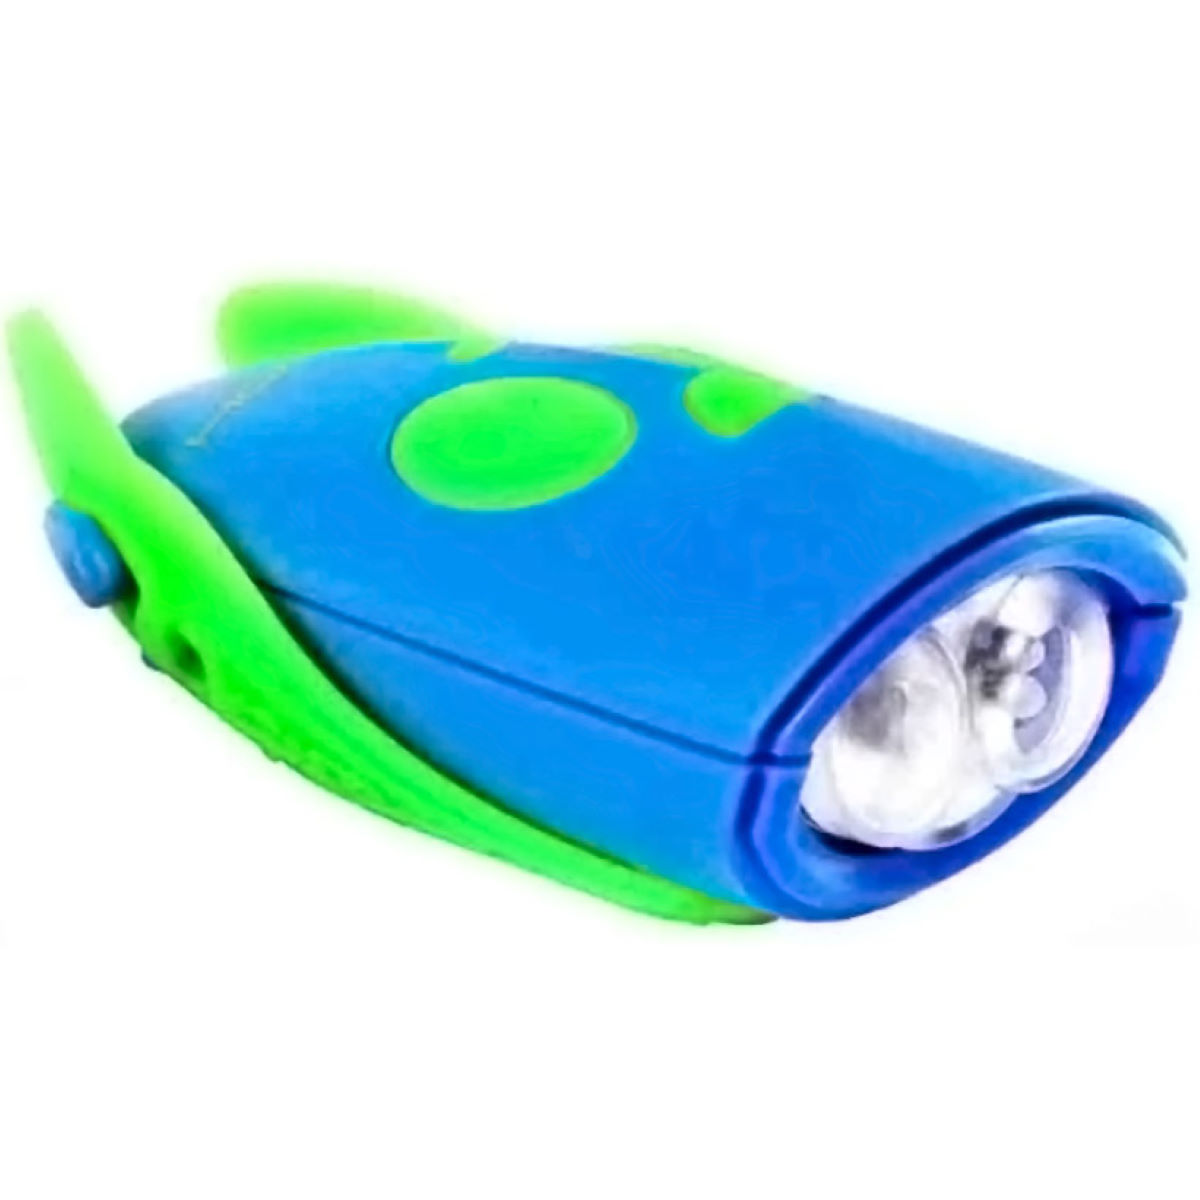 Luz y bocina para bicicleta Hornit MINI (morado/verde, tamaño único) - Luces delanteras